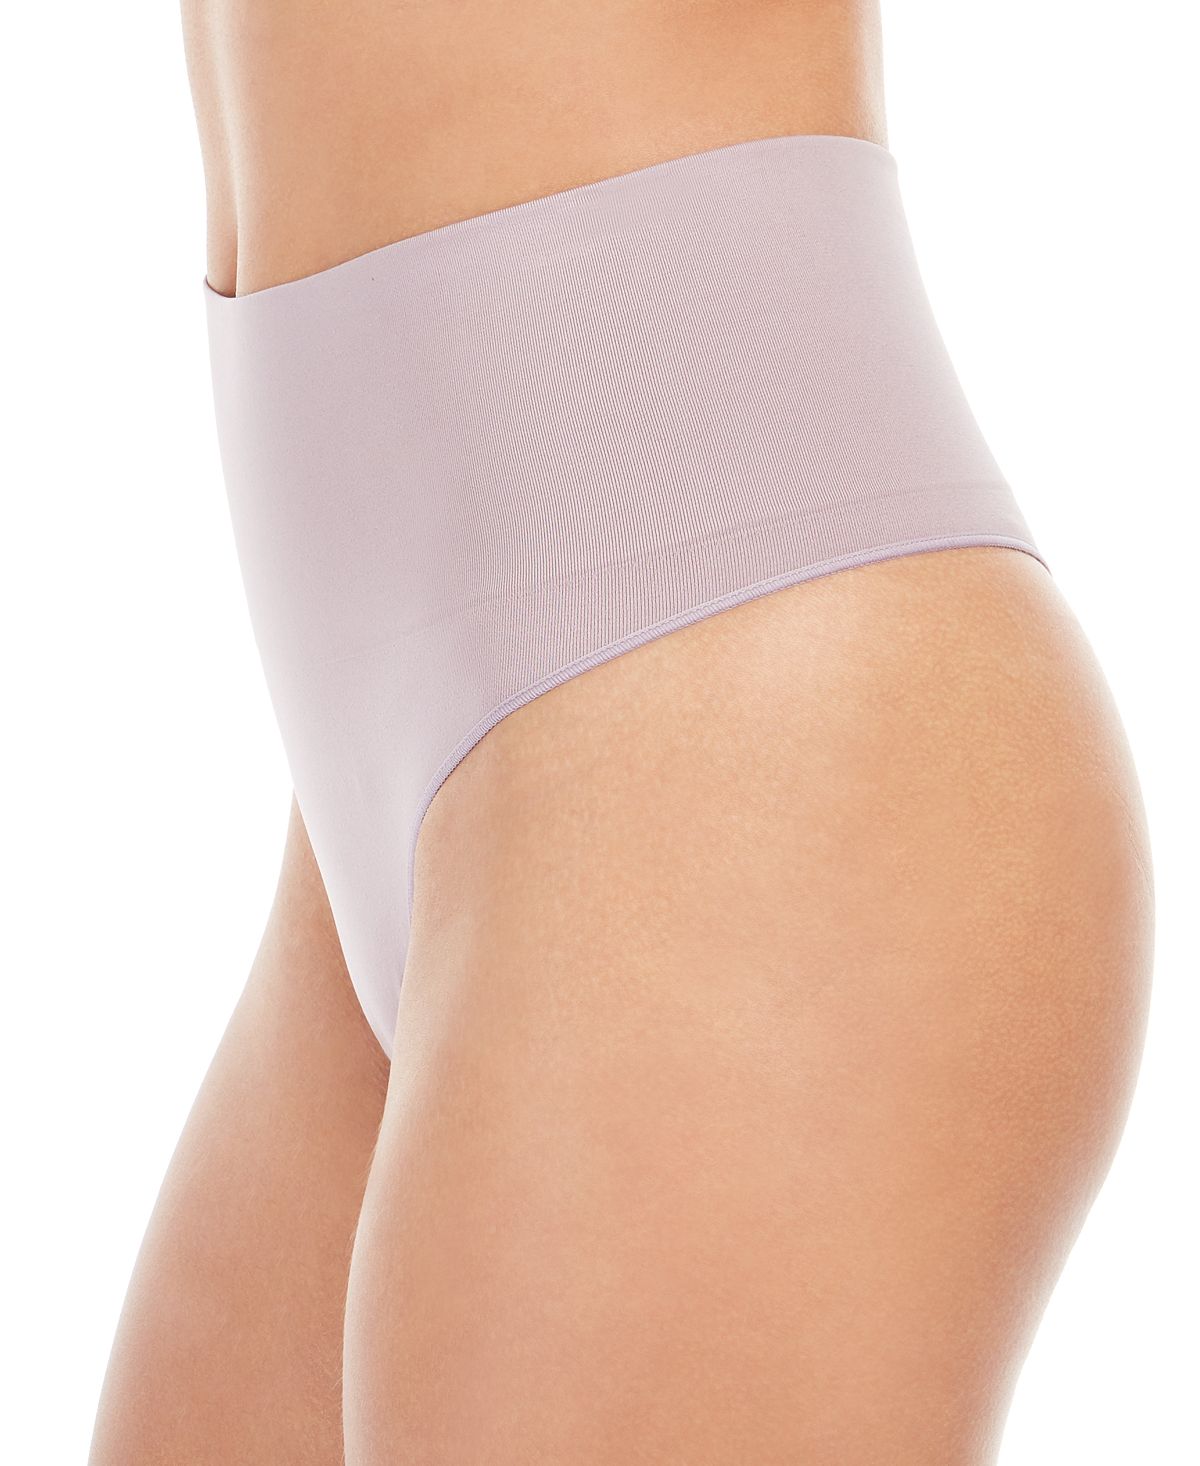 Buy Spanx womens everyday shaping panties thong lavender Online